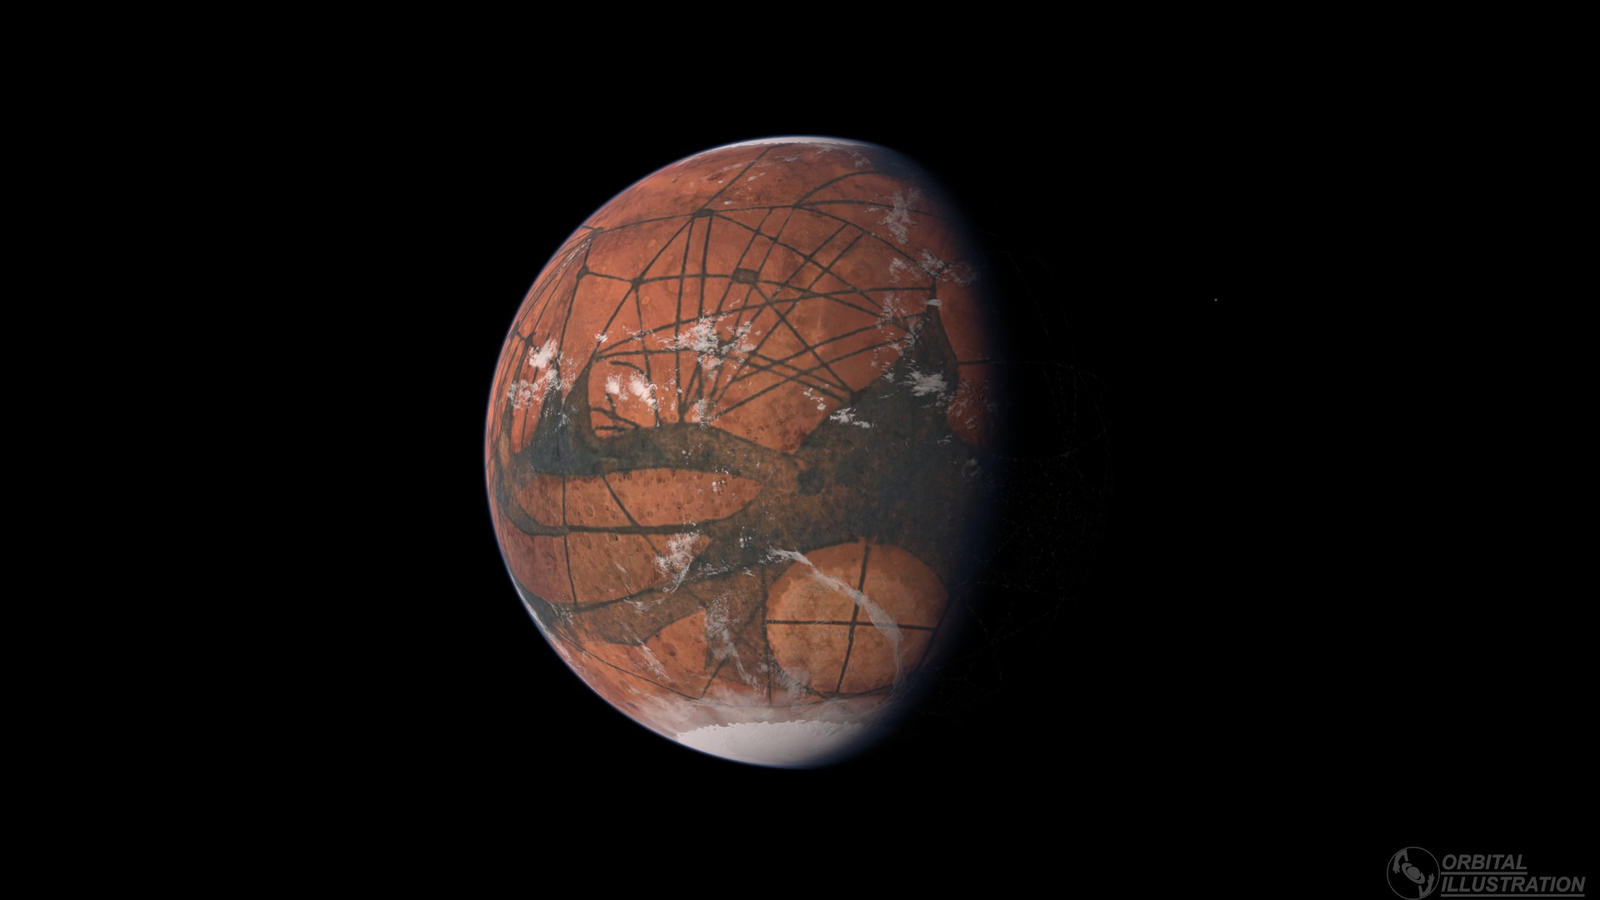 Lowell's Mars